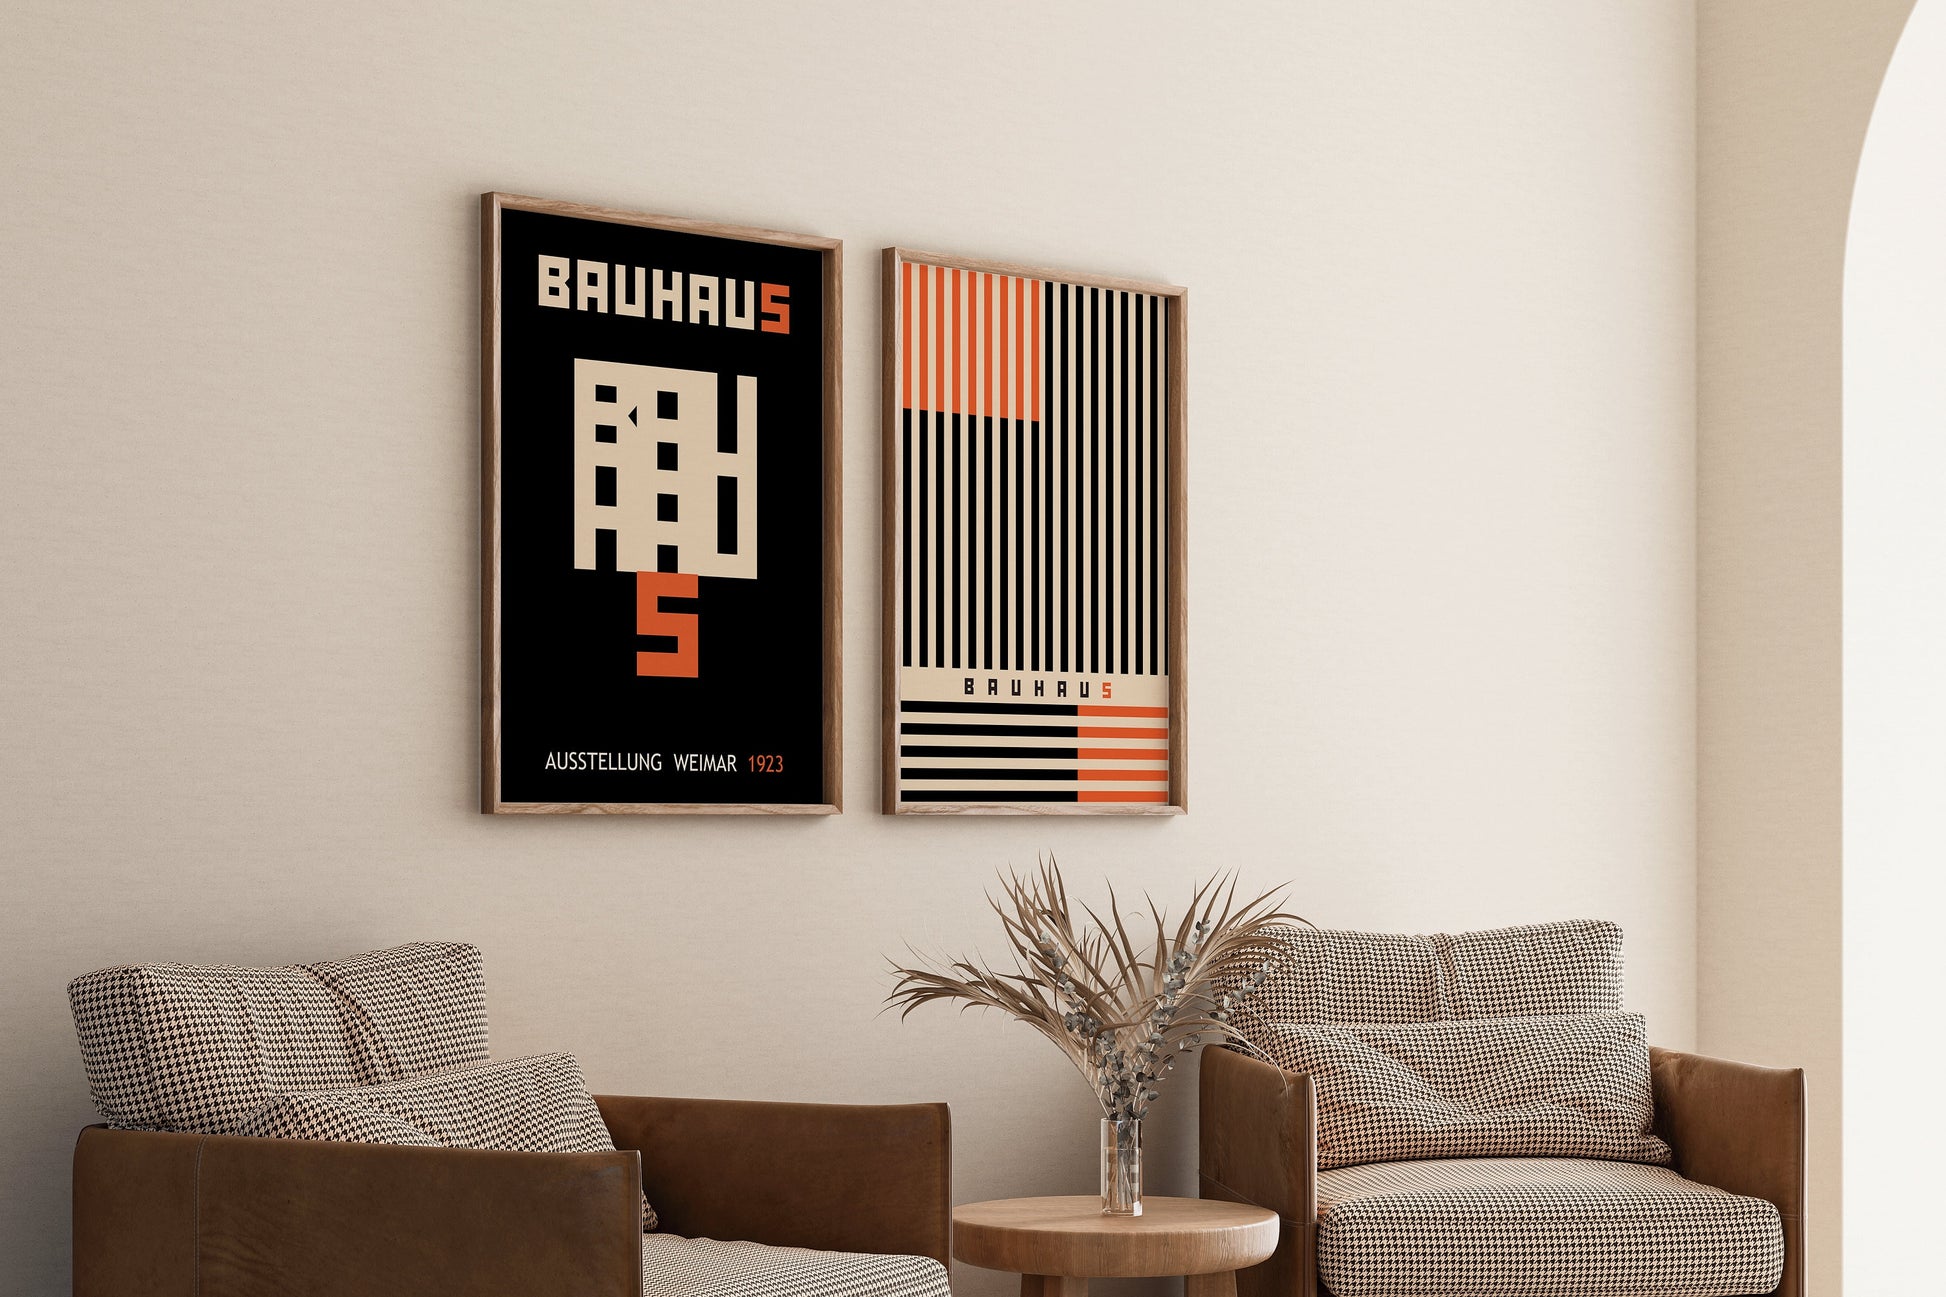 Set of 2 Orange Black Bauhaus Posters Mid-Century Museum Modern Art Print 60s Vintage Minimalist Framed Ready to Hang Home Office Decor Gift